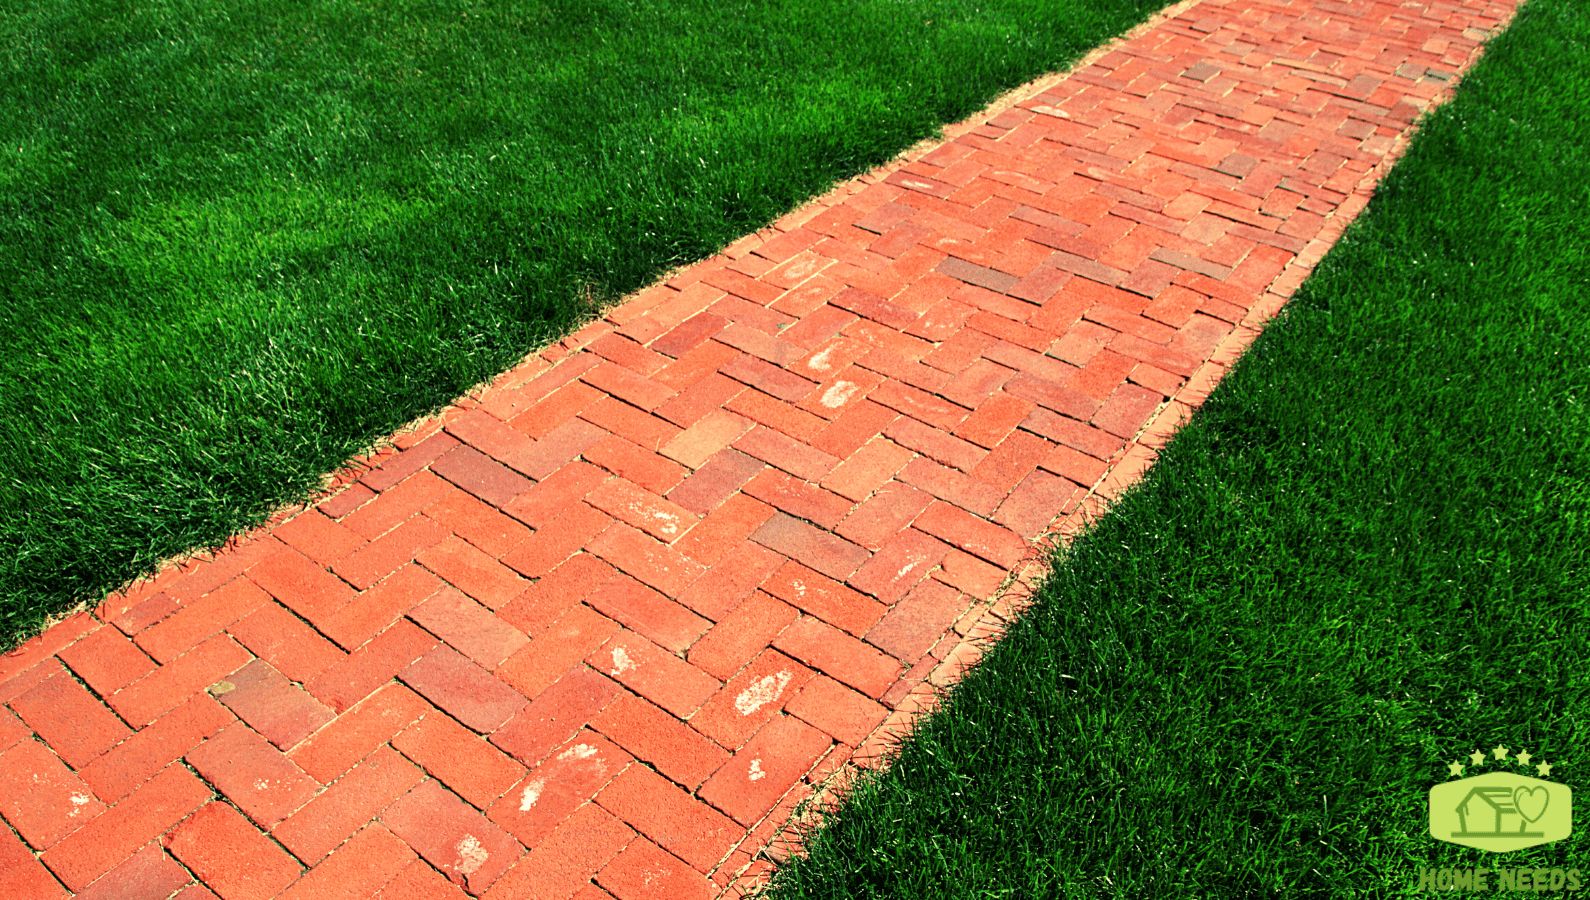 Traditional Brick Walkway